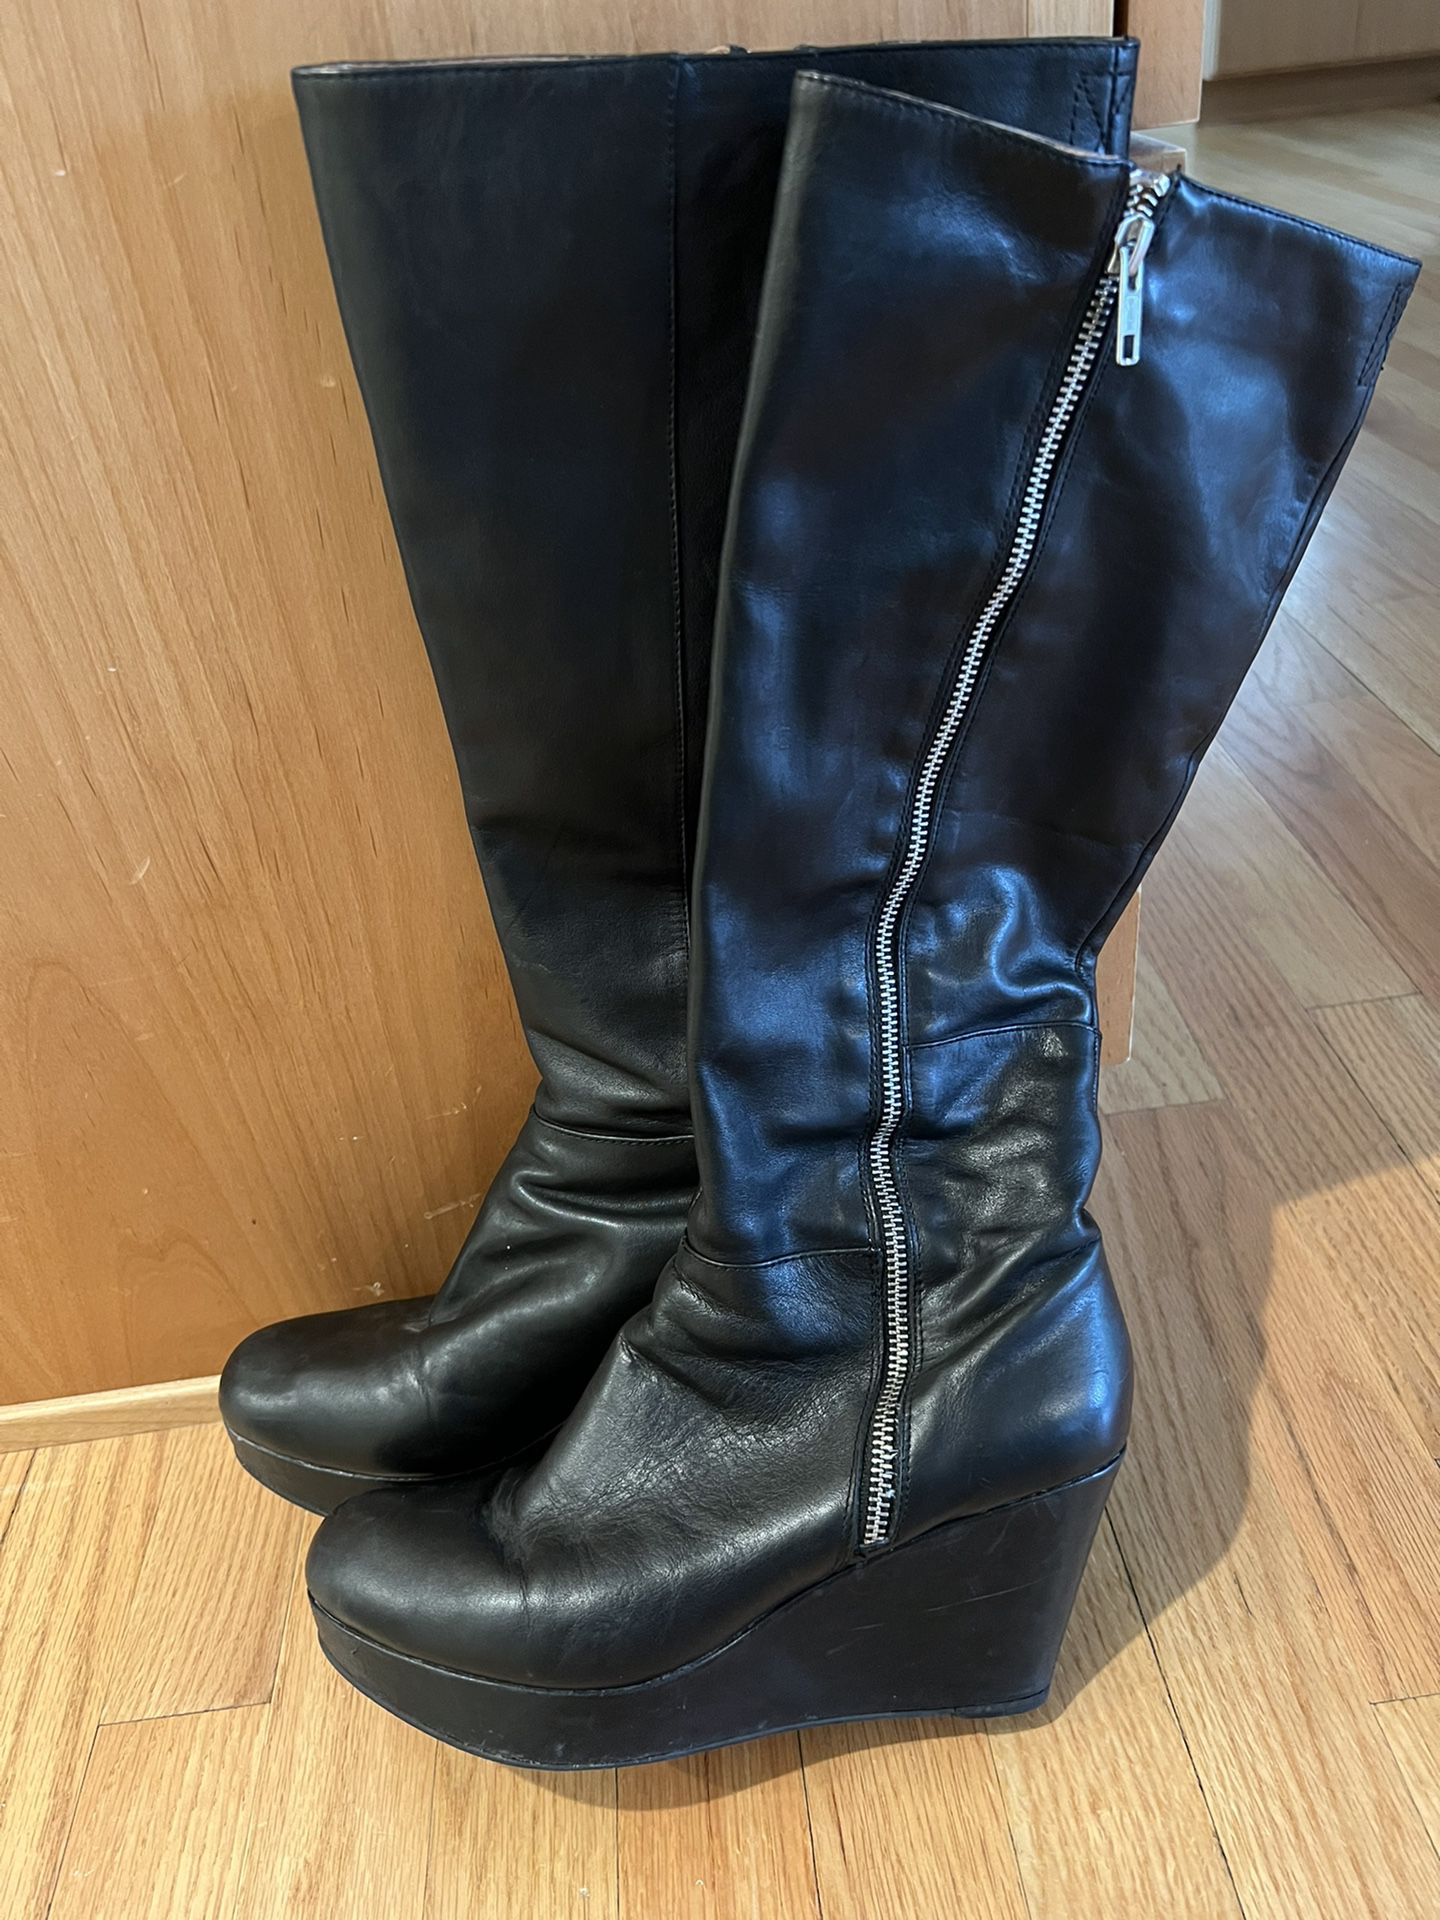 Aldo Wedge Boots Size 9